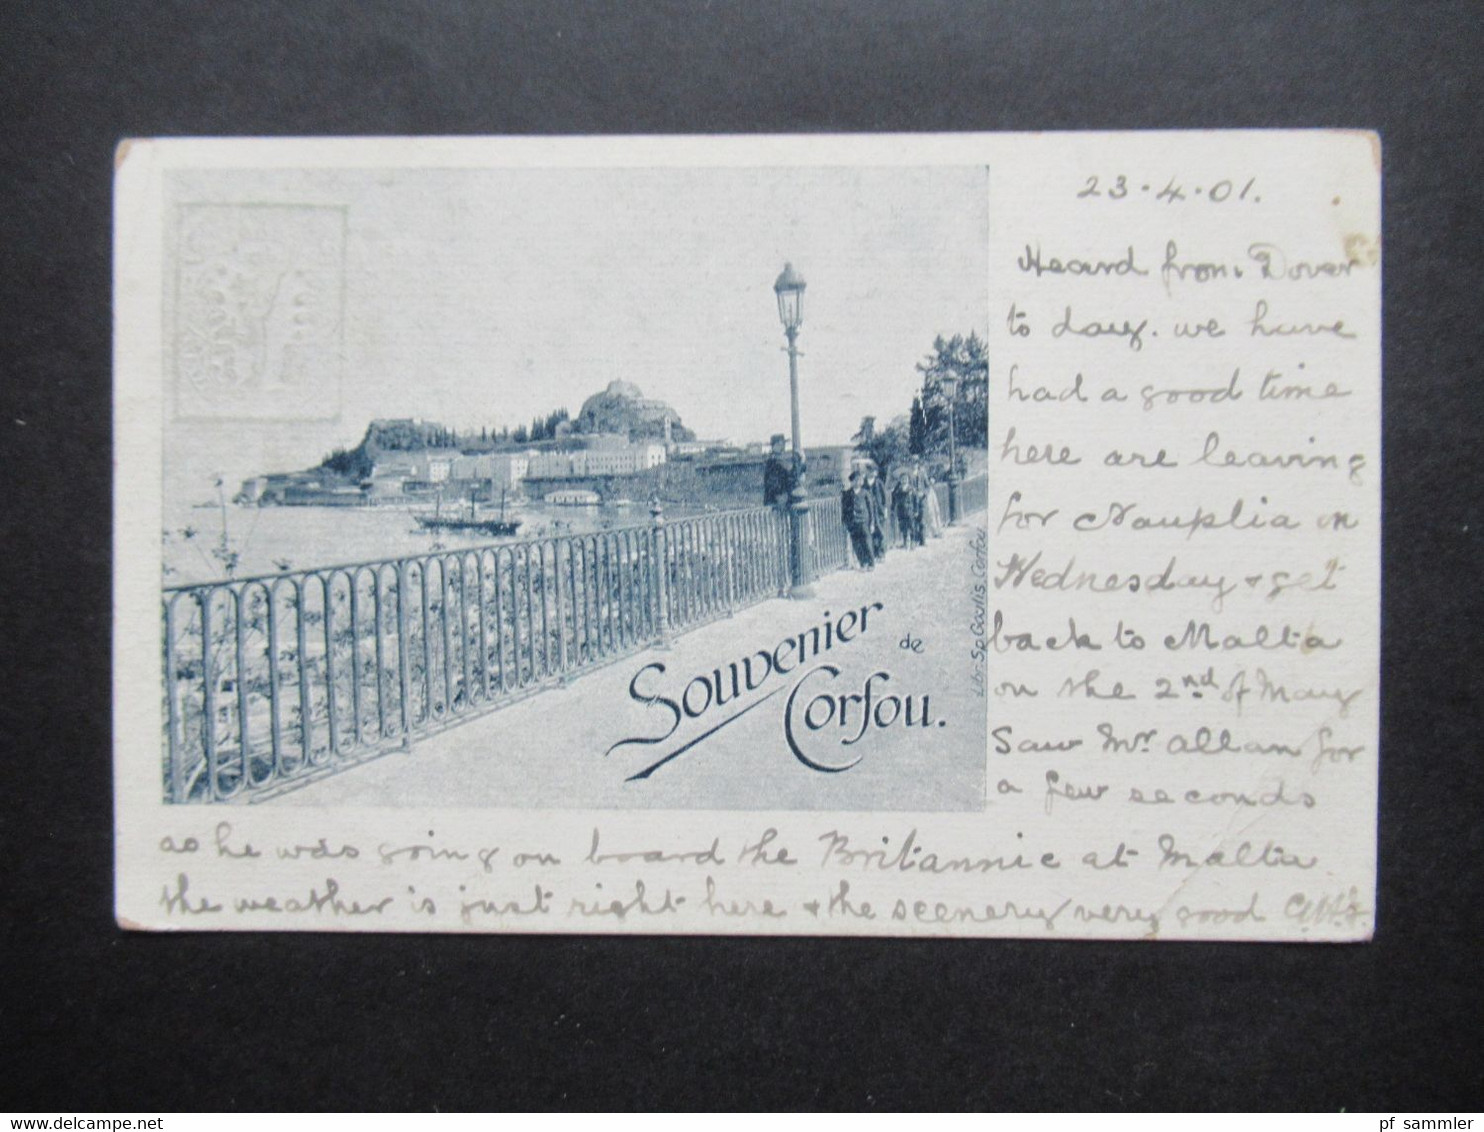 Griechenland 1901 Ganzsache / Bildpostkarte Souvenir De Corfou Libr. Sp. Goulis Corfou Nach Chatham England Gesendet - Enteros Postales